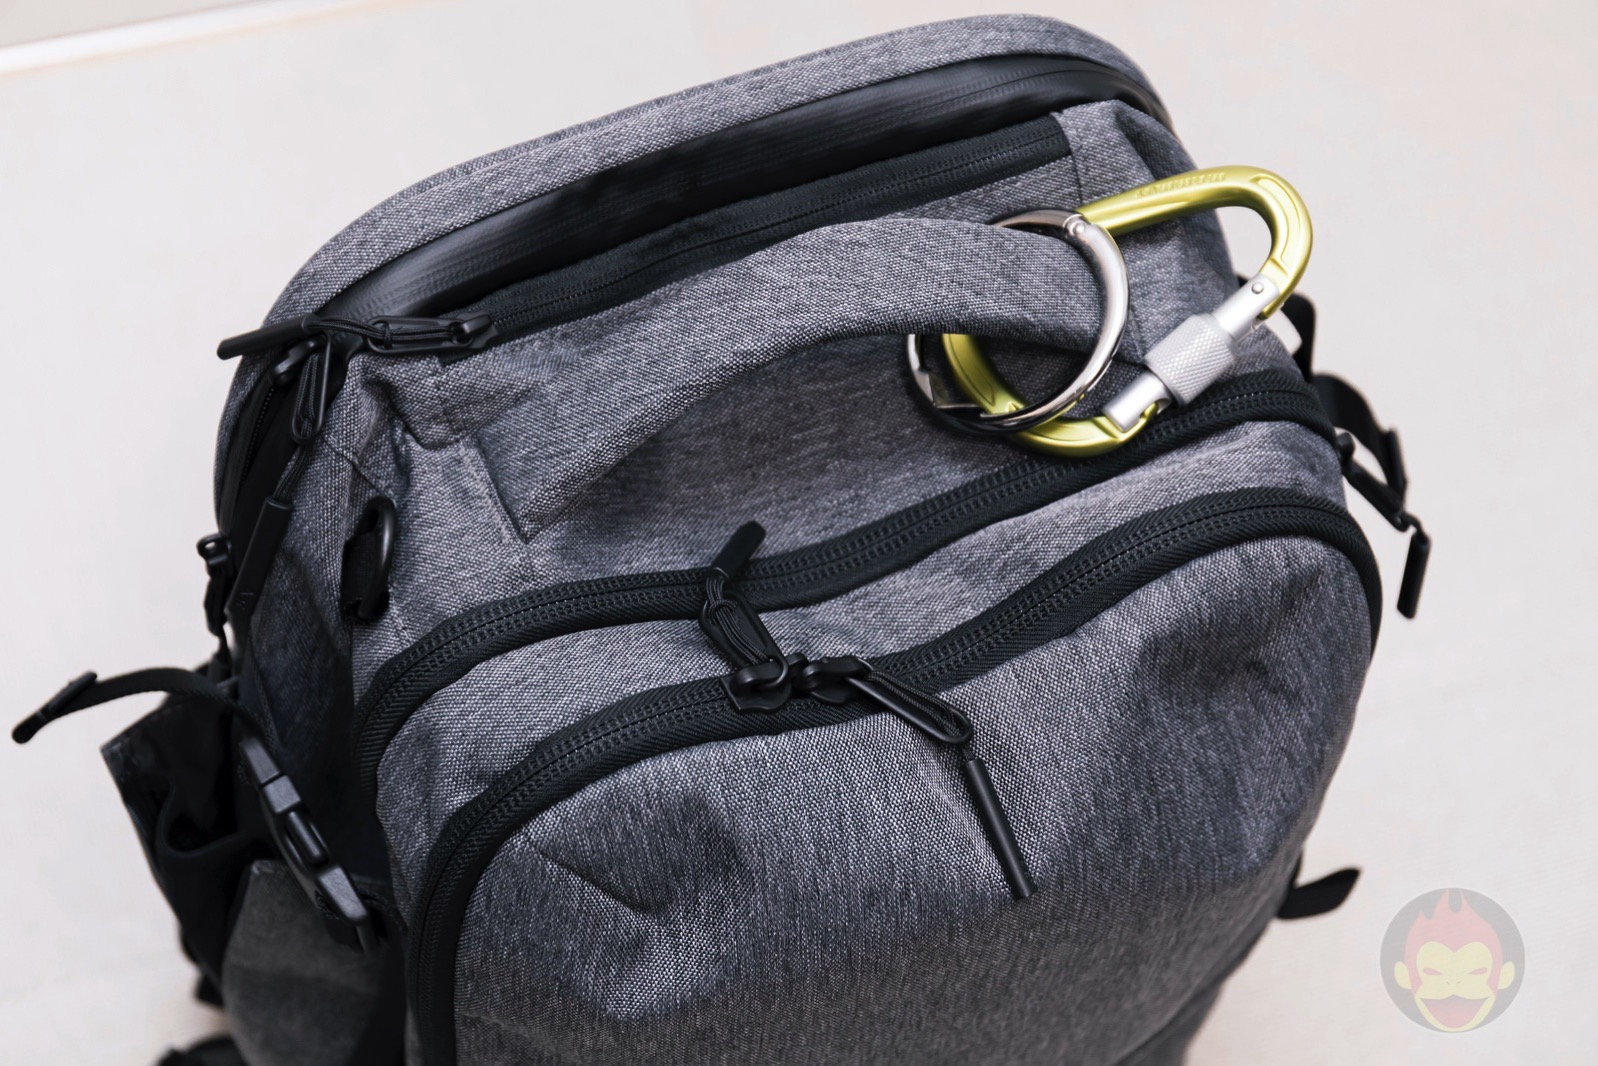 Aer-Travel-Pack-2-Backpack-Review-12.jpg